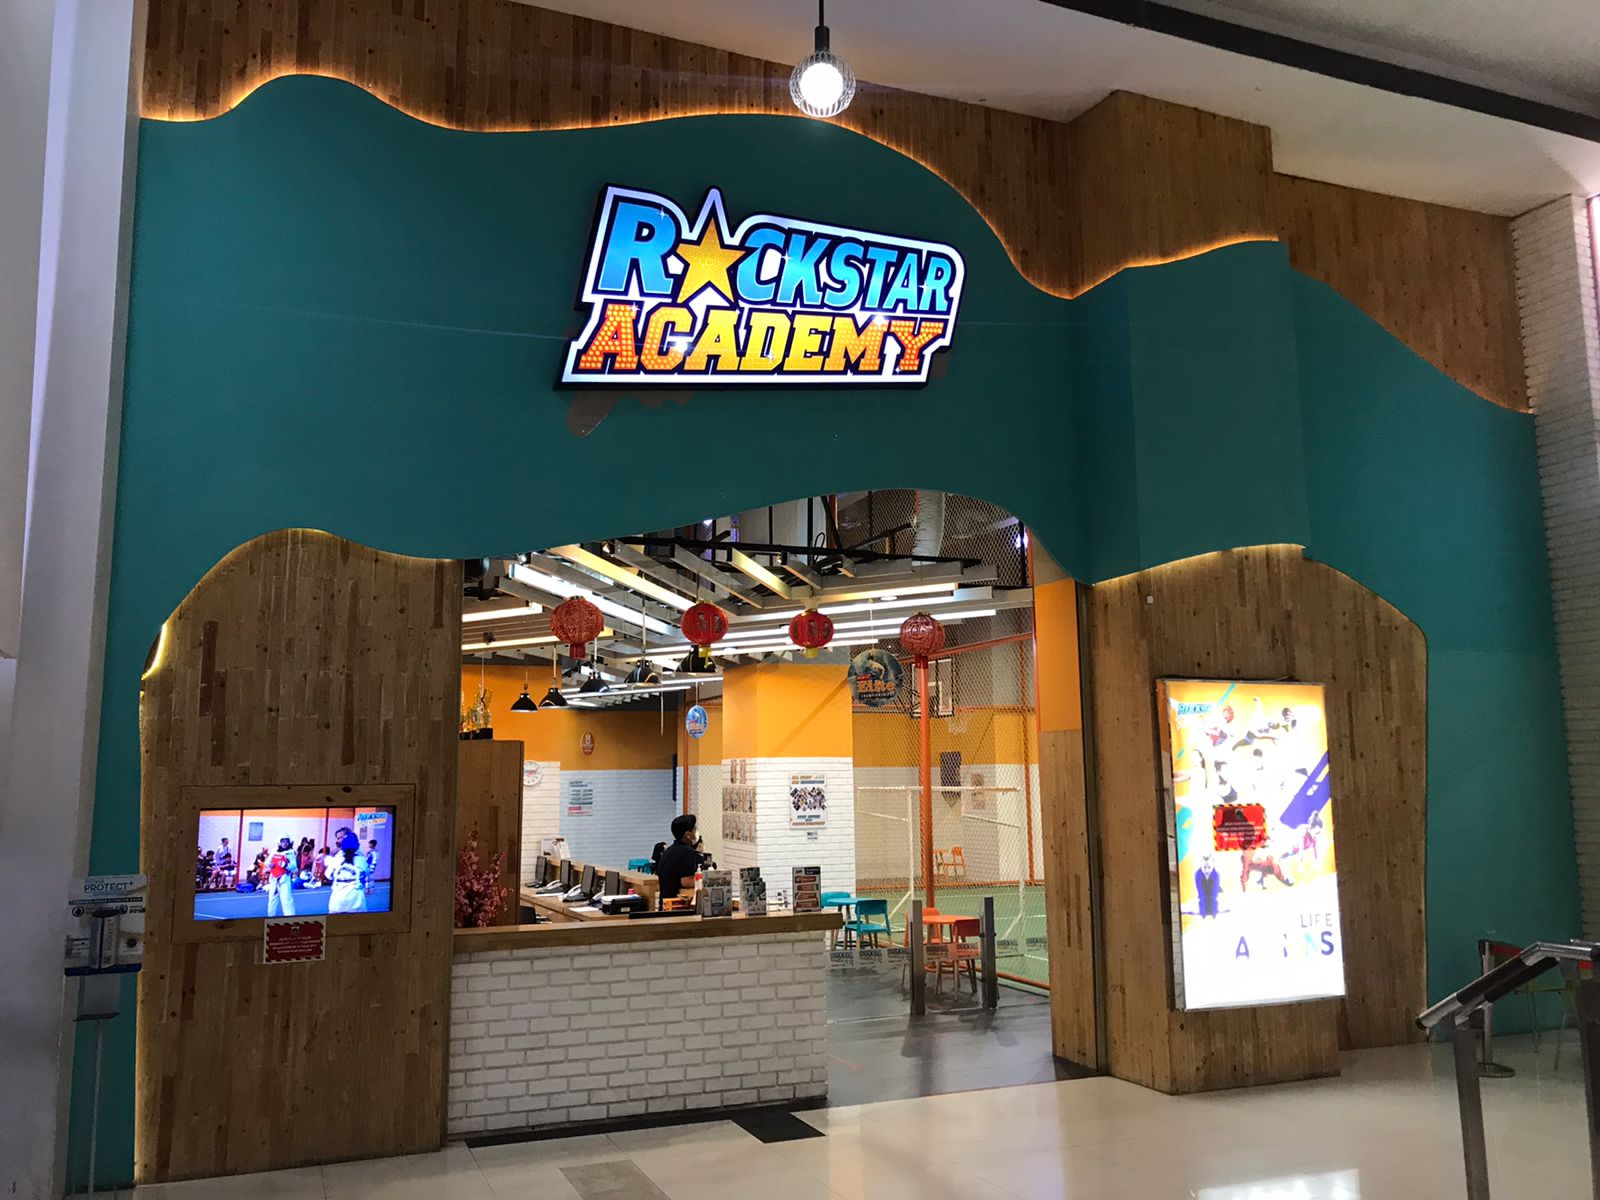 Rockstar Academy shop front in lippo mall puri st. moritz